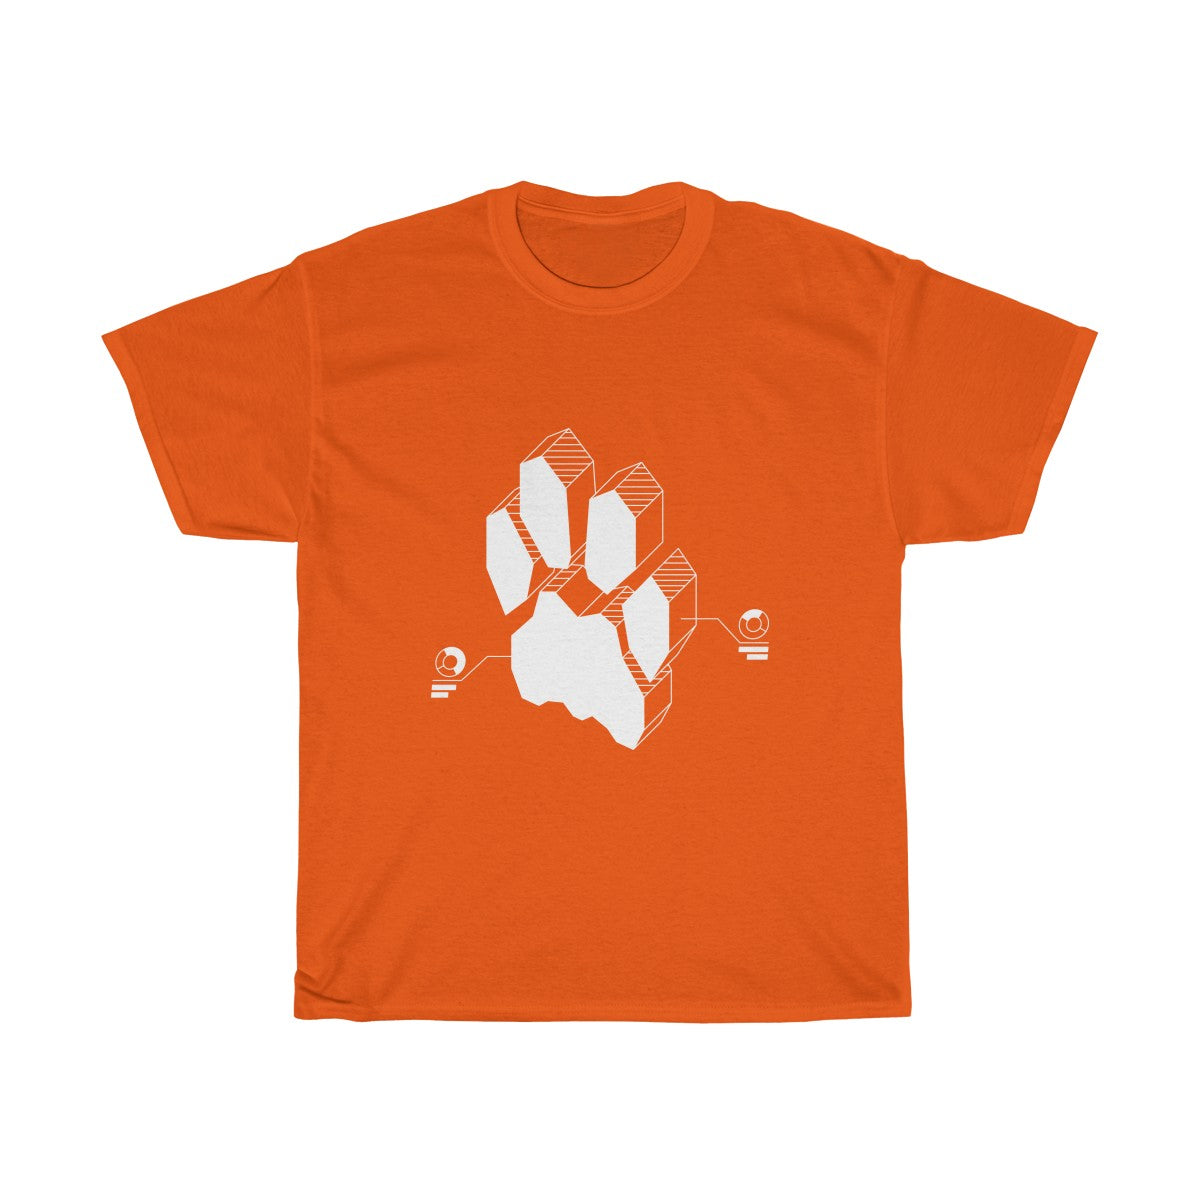 Techno Feline - T-Shirt T-Shirt Wexon Orange S 